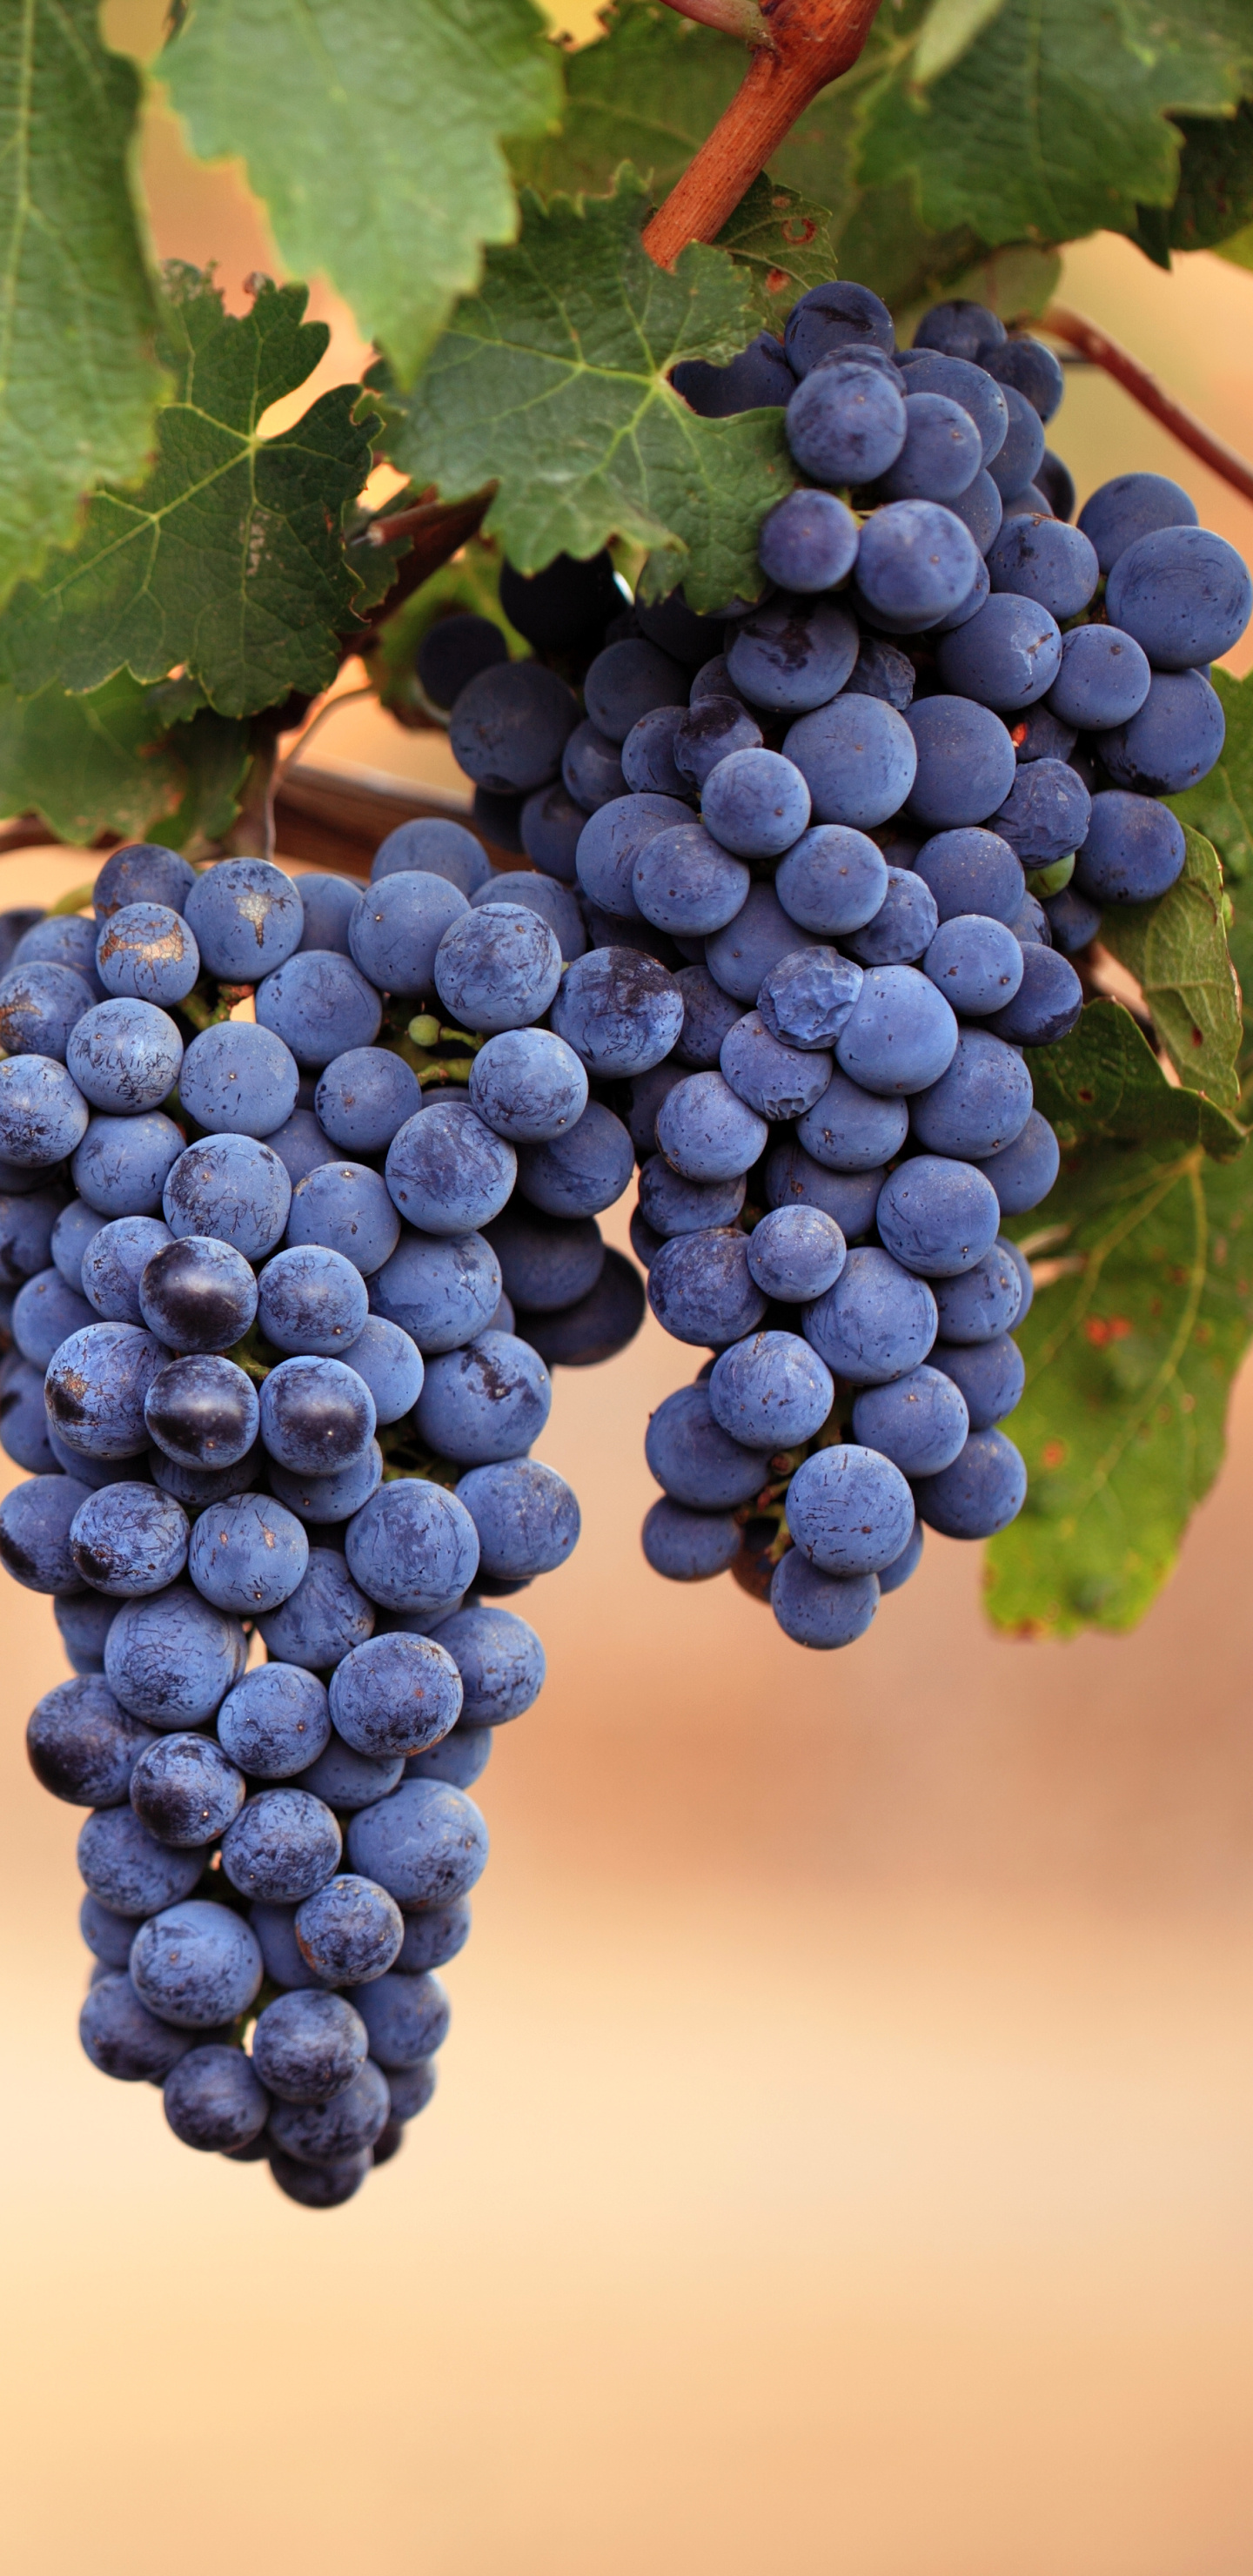 Grapes: Contains antioxidants, vitamin C, potassium, and vitamin K. 1440x2960 HD Background.